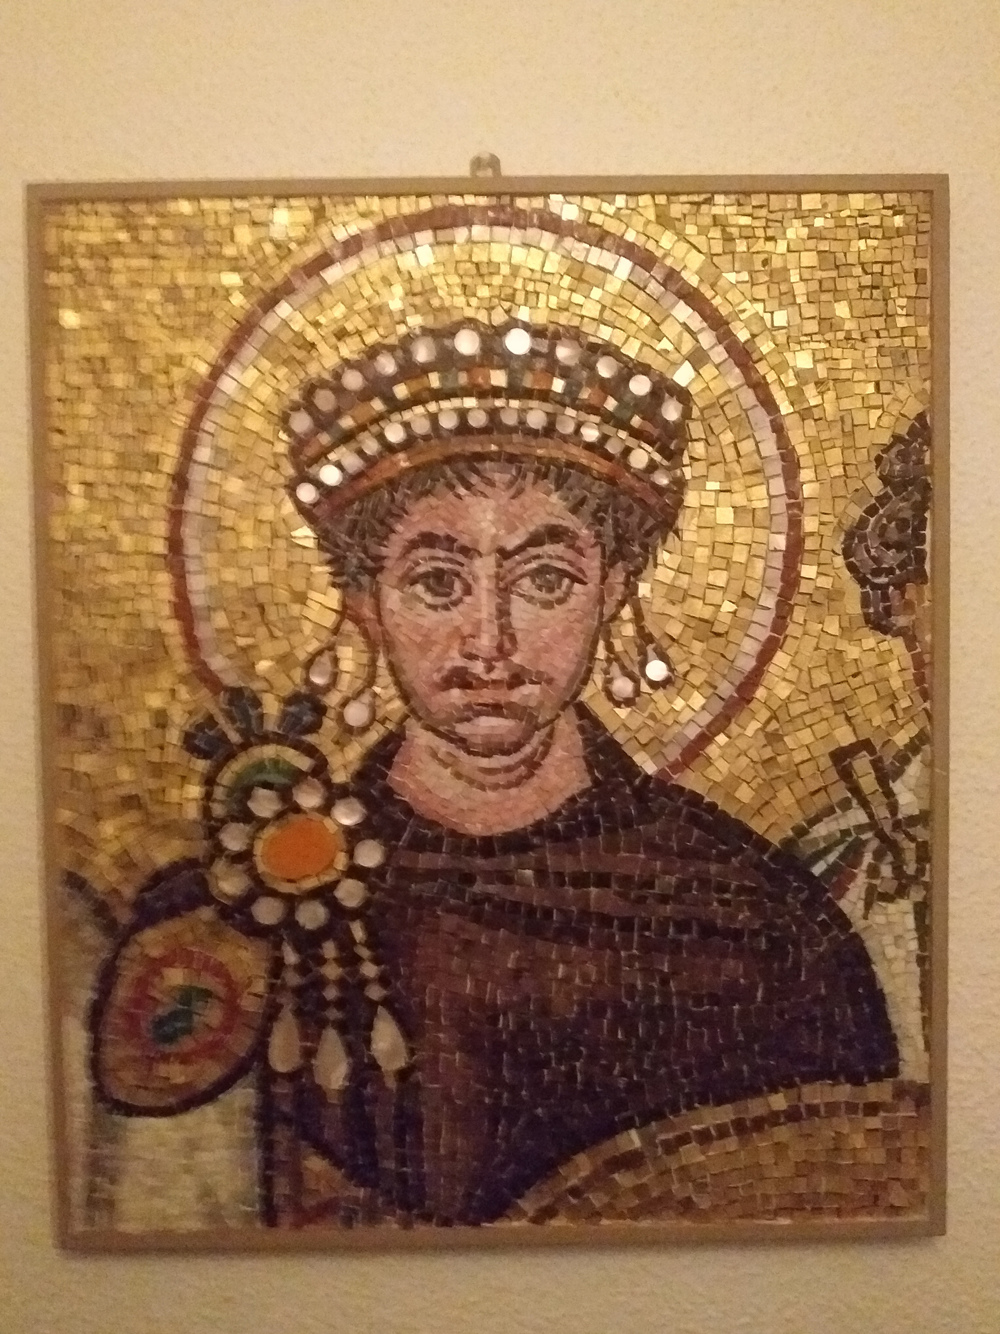 Mosaikbild Motiv Kaiser Justinian 6. Jahrhundert mit Blattgold und Perlmutt